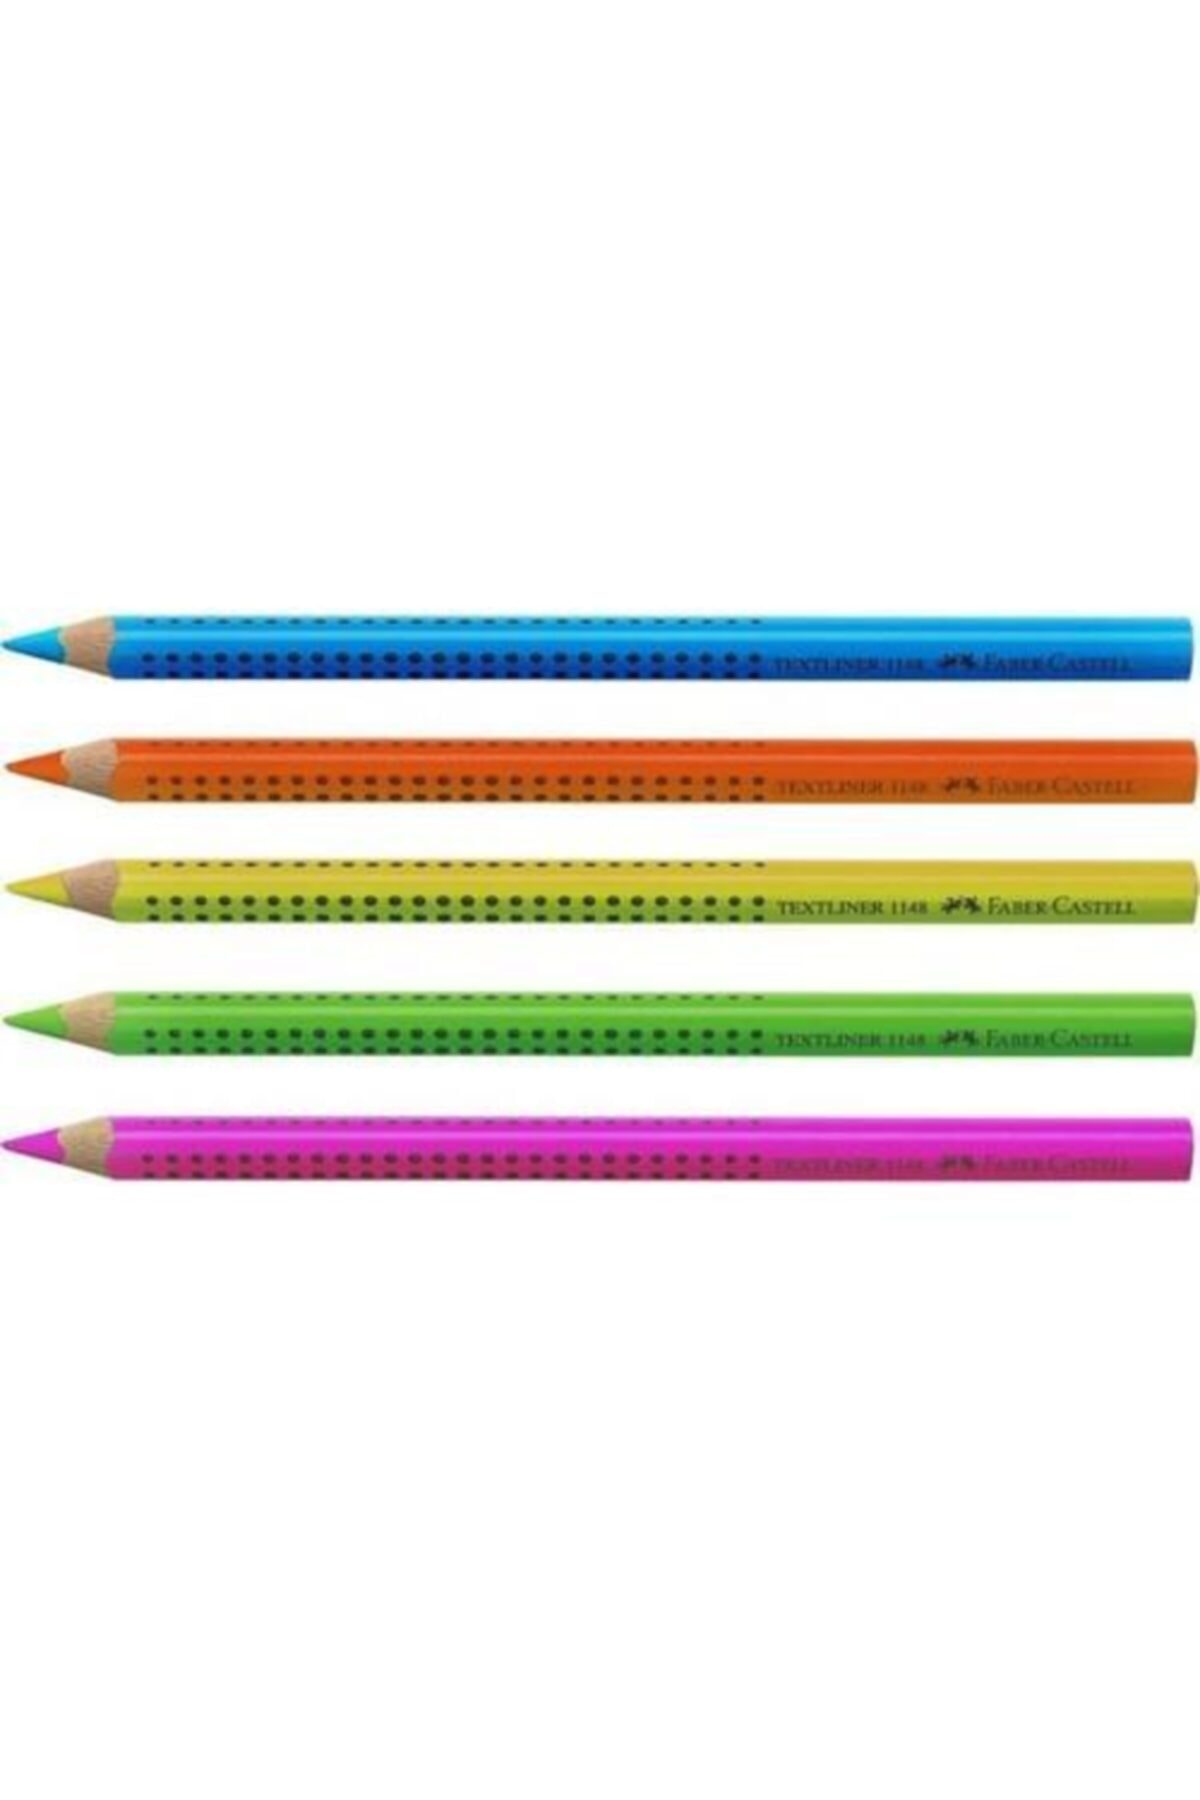 Faber Castell 5 Renk Ahşap Fosforlu İşaretleme Kalemi